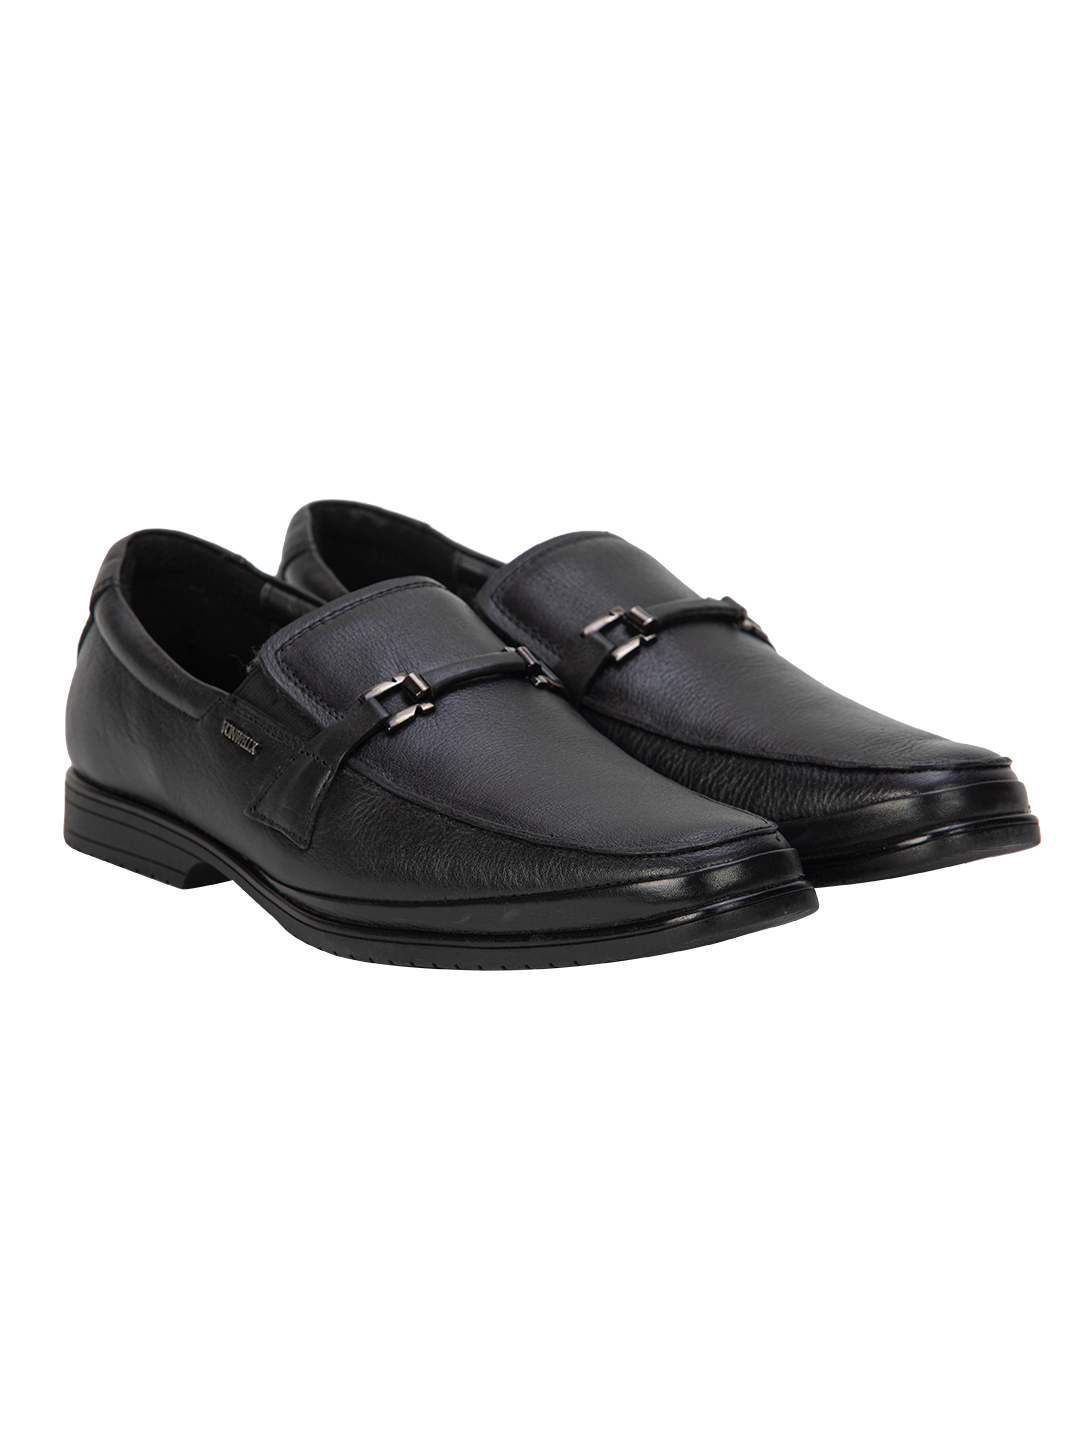 Buy Von Wellx Germany Comfort Black Jace Shoes Online in Nashik